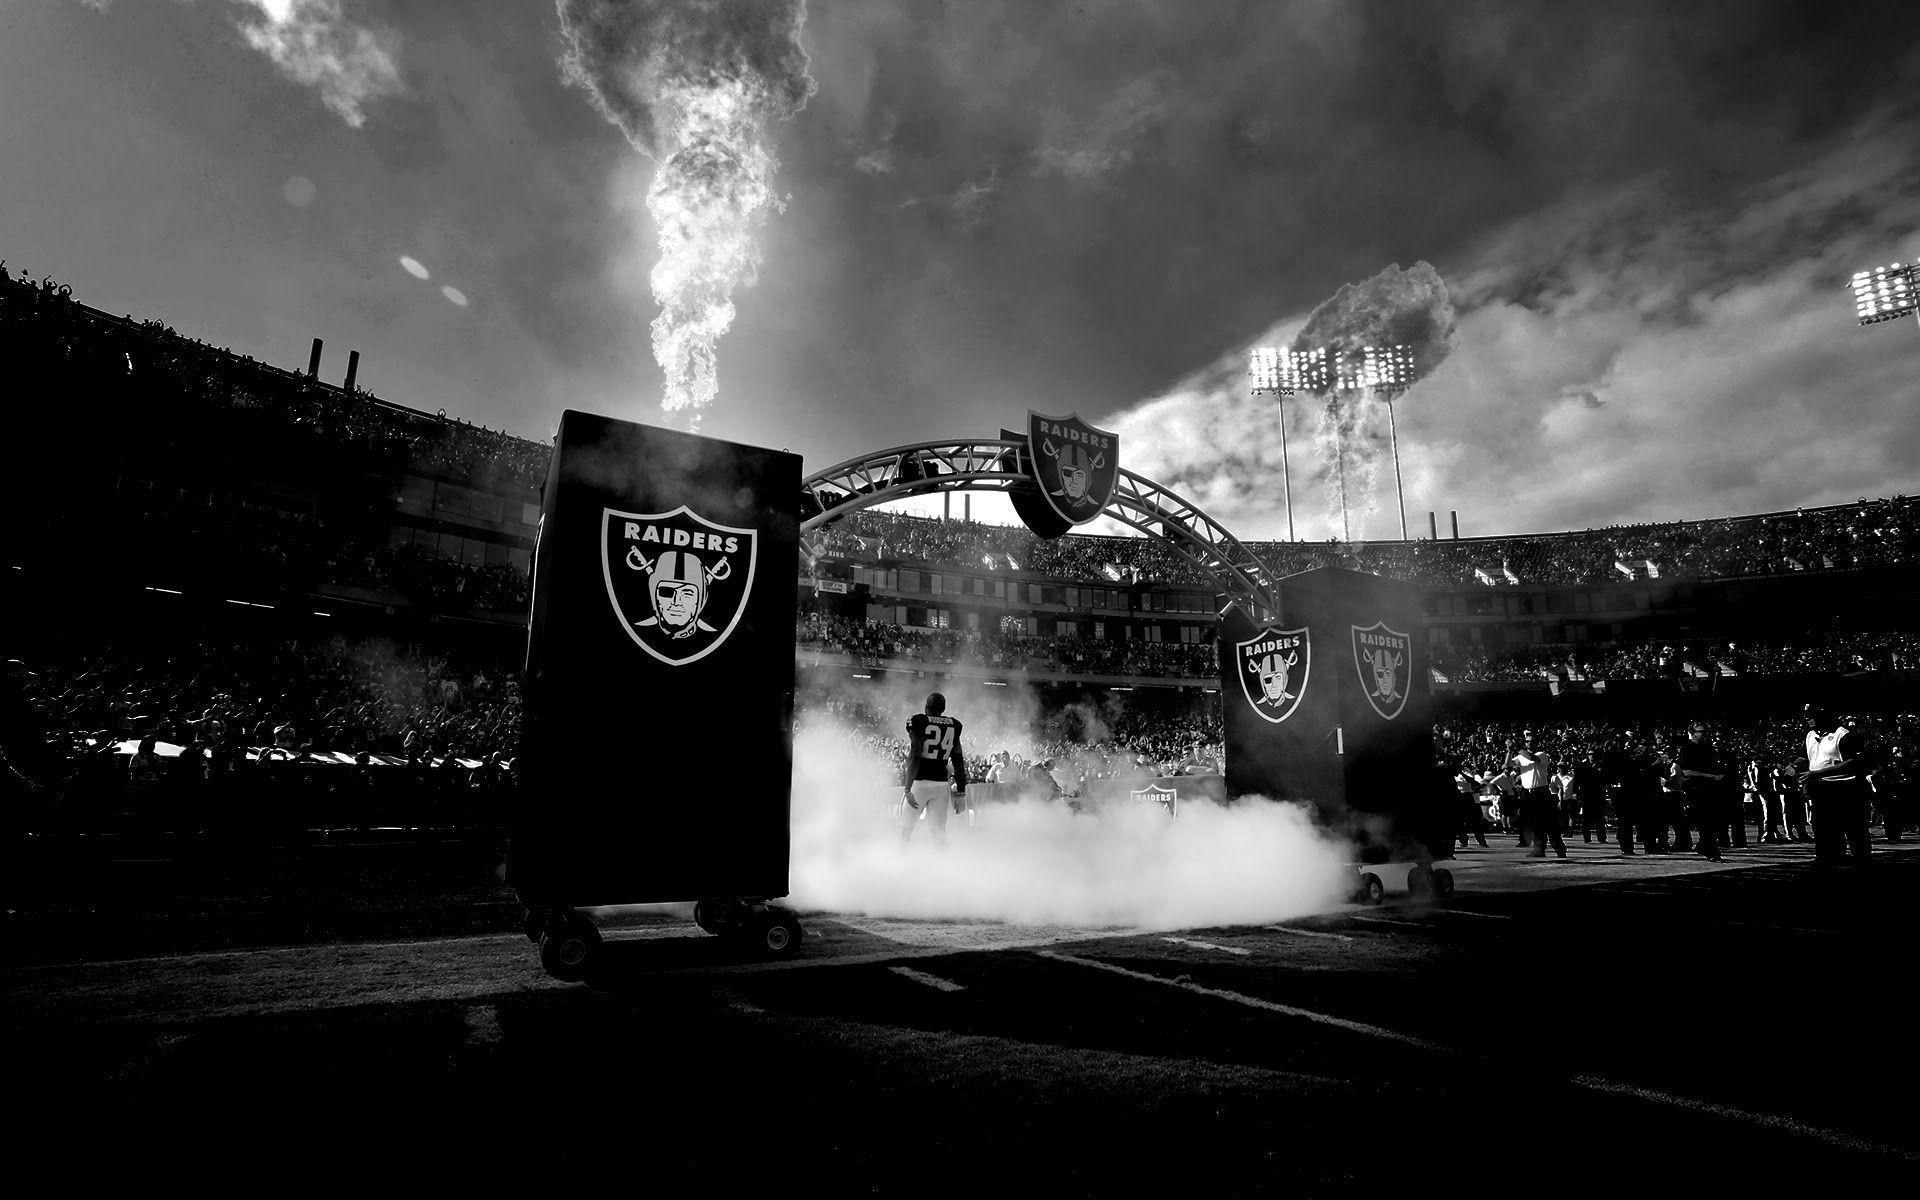 Oakland Raiders 2015 Highlights.. "Greatness Awaits" HD